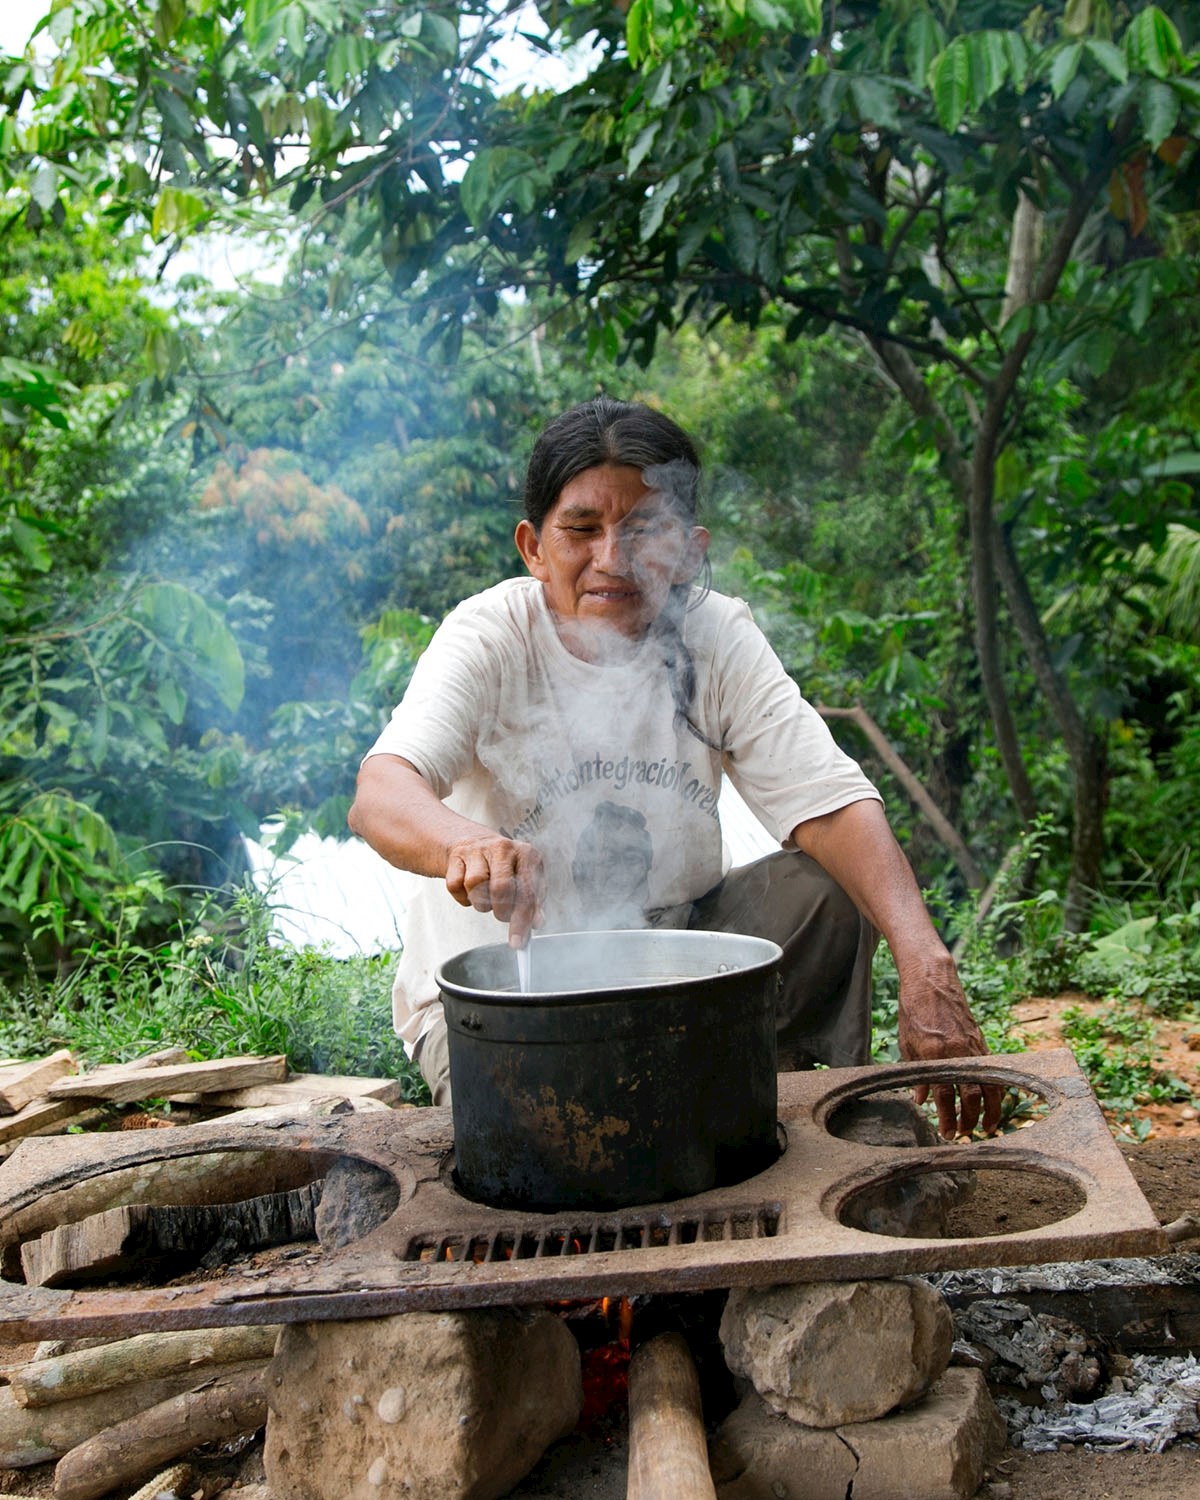 Amazonian restaurants often do the cooking outside - 